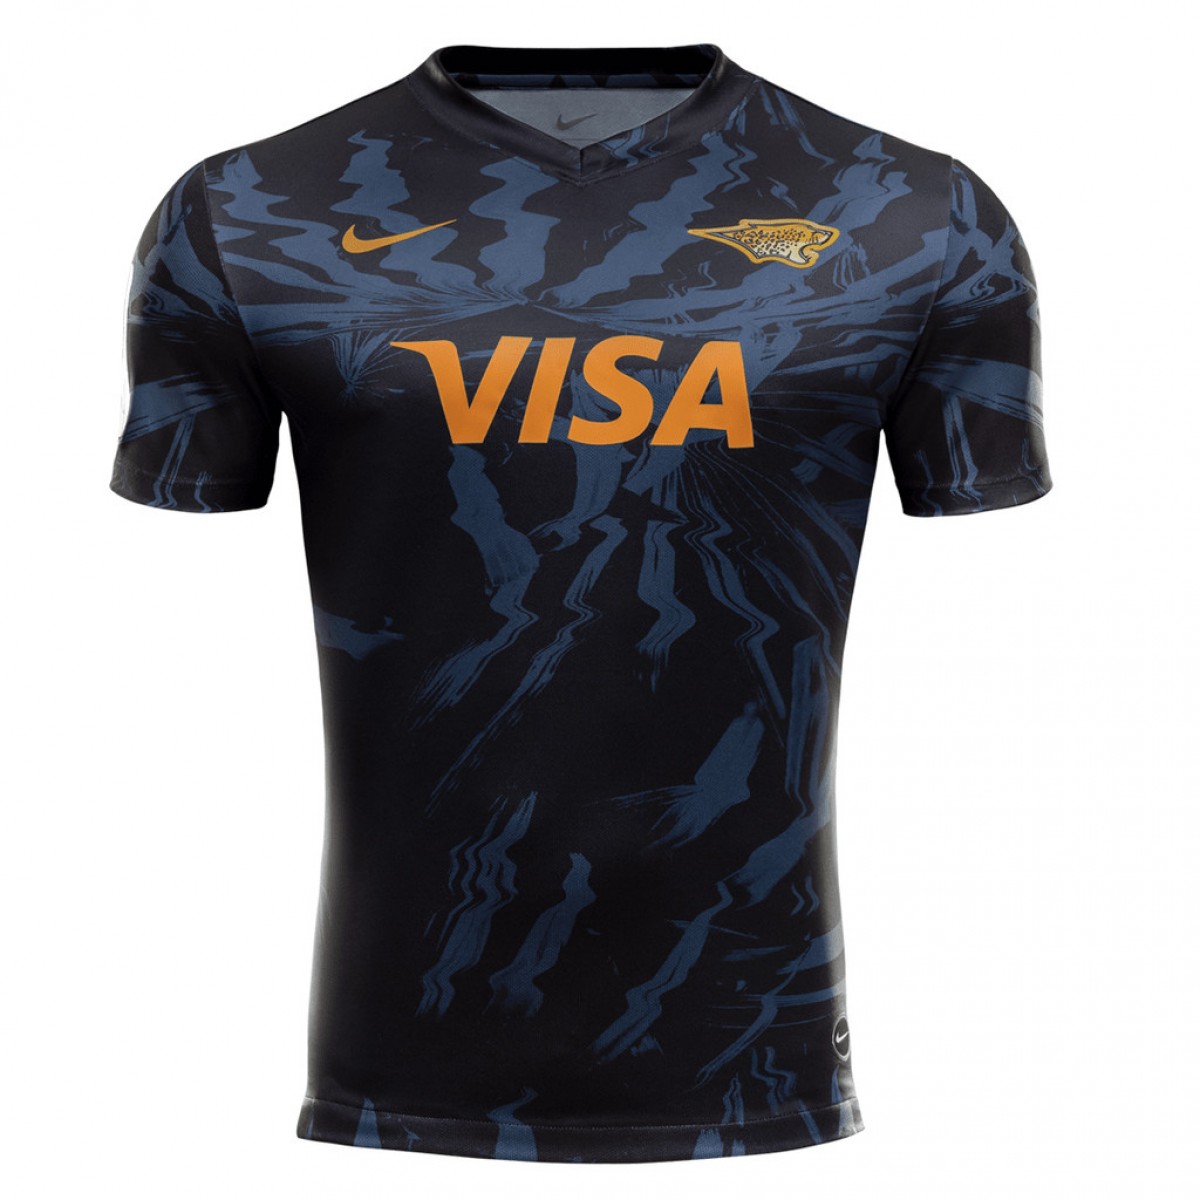 NEW 2020-2021 Jaguares Rugby Jersey short sleeves T shirt S-XXXL 